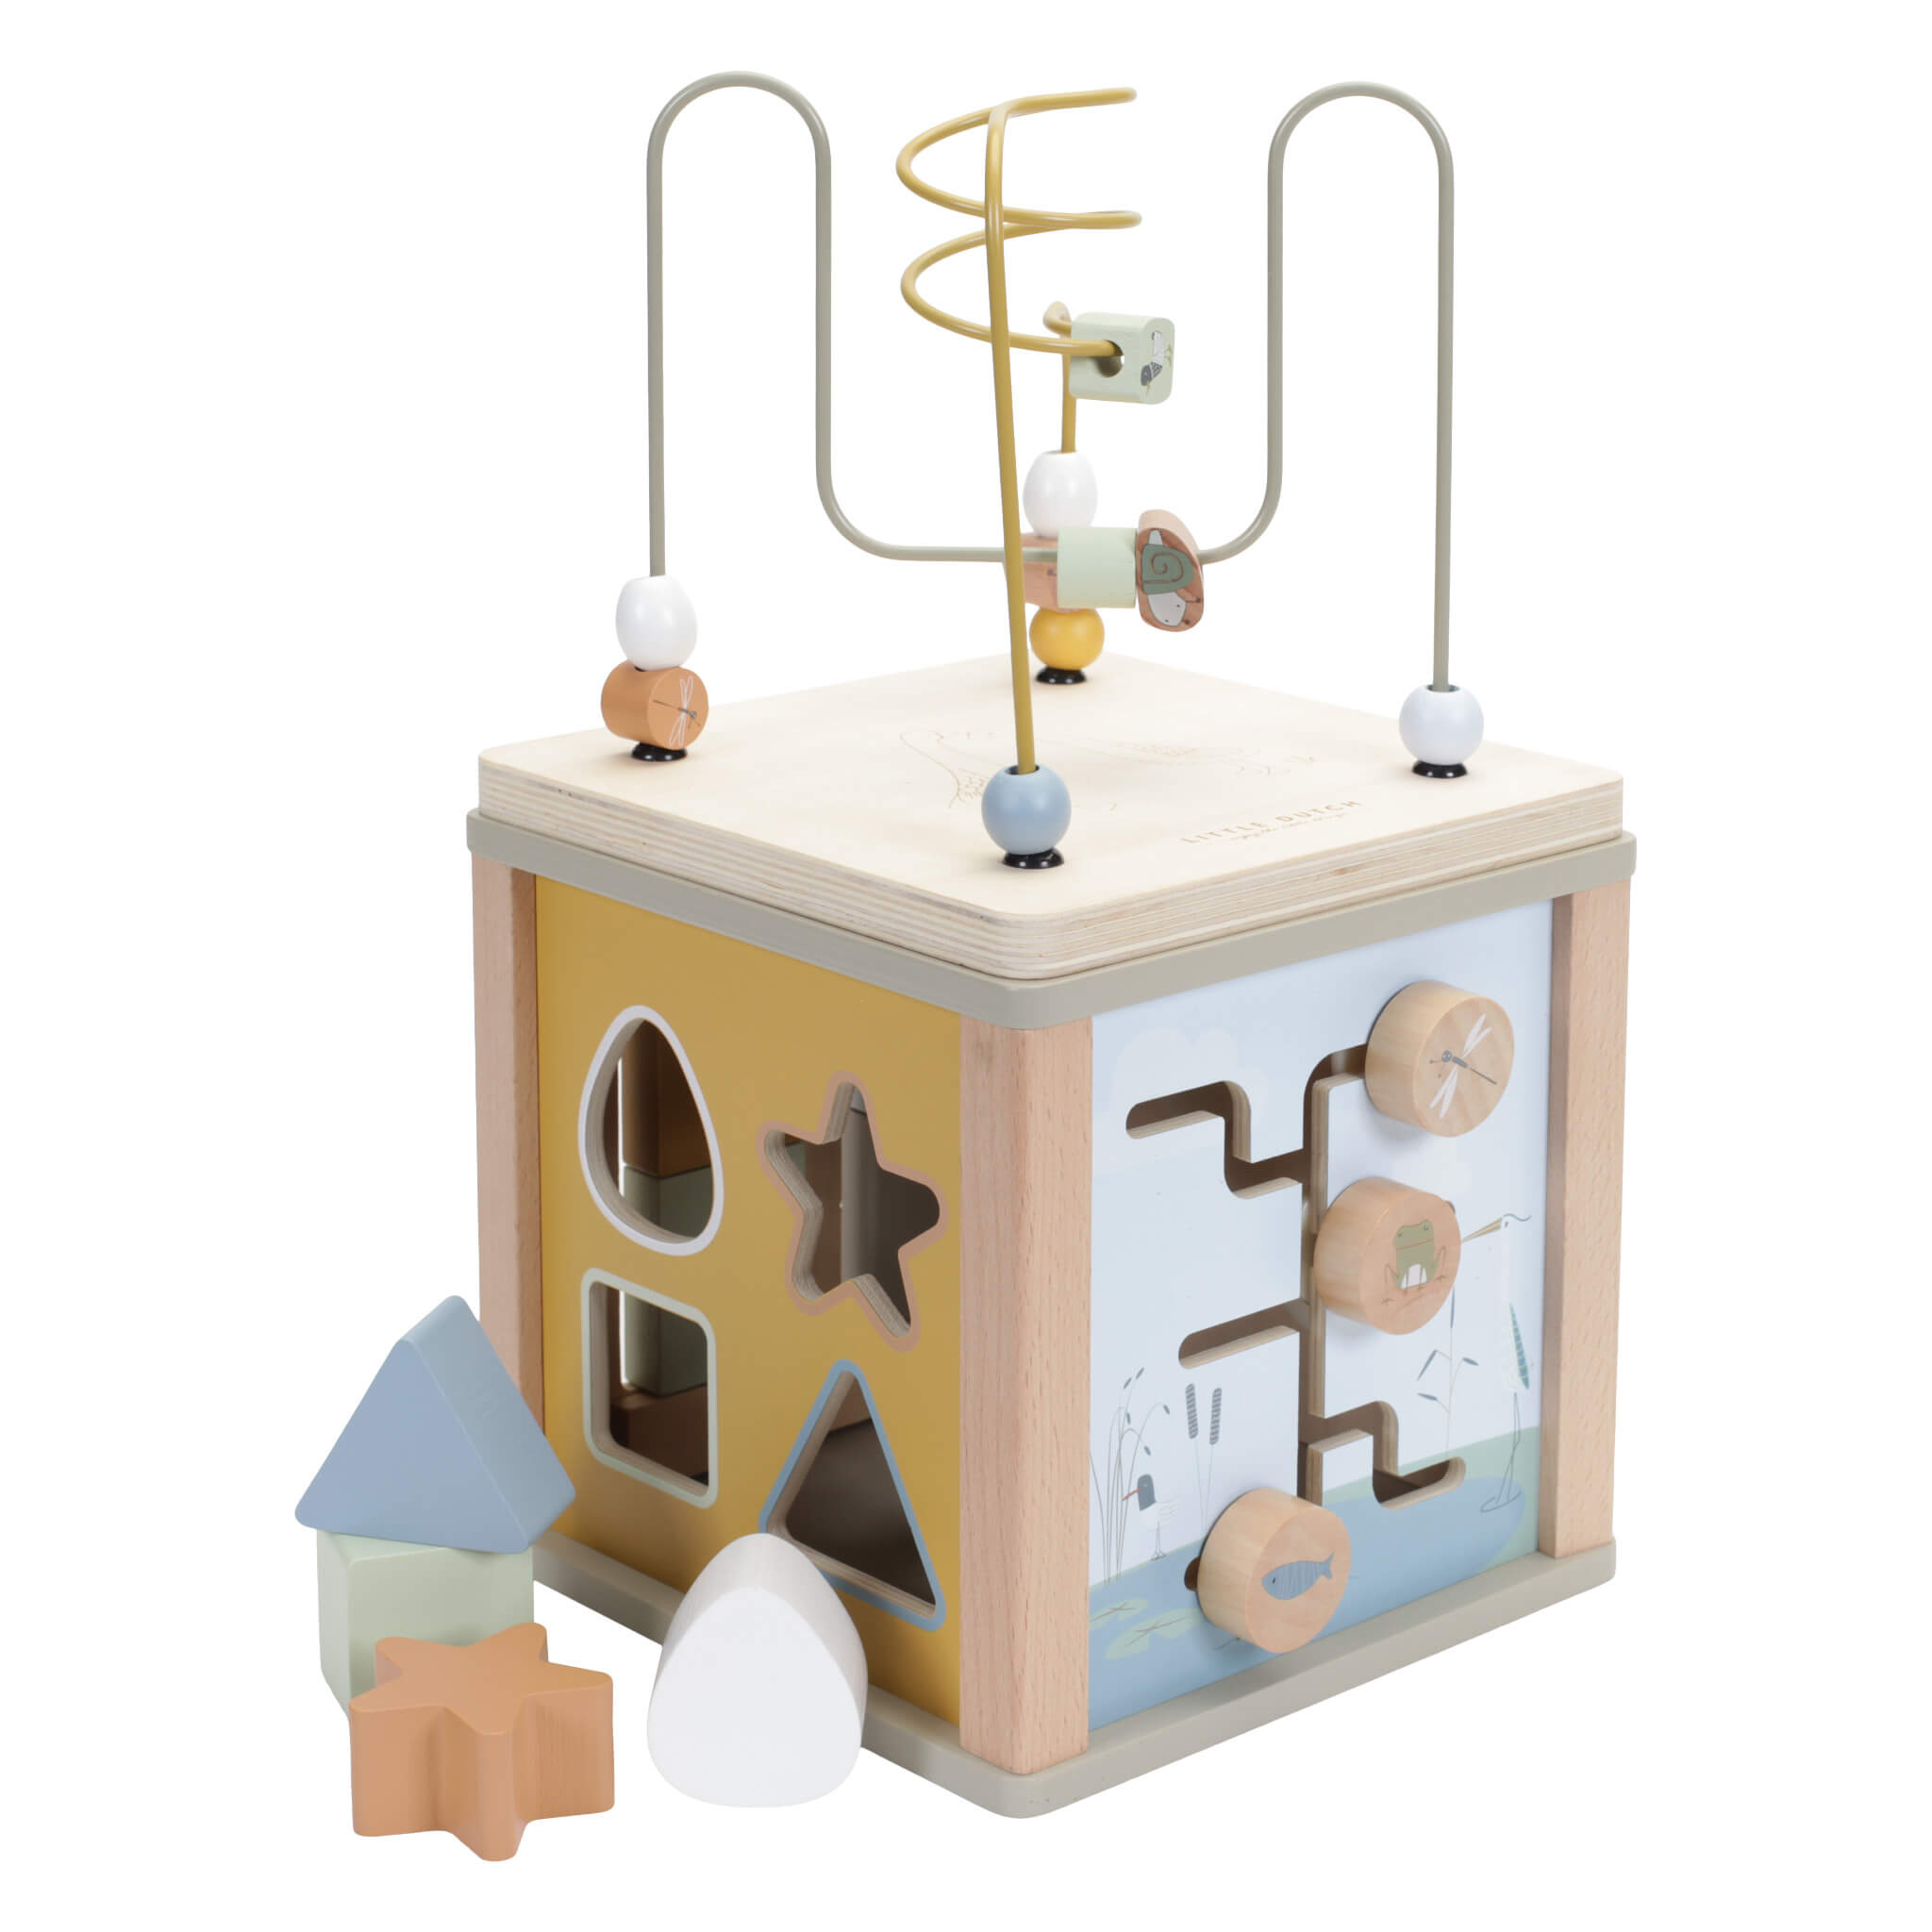 Little Dutch Wooden Activity Cube Toy in Little Goose Design